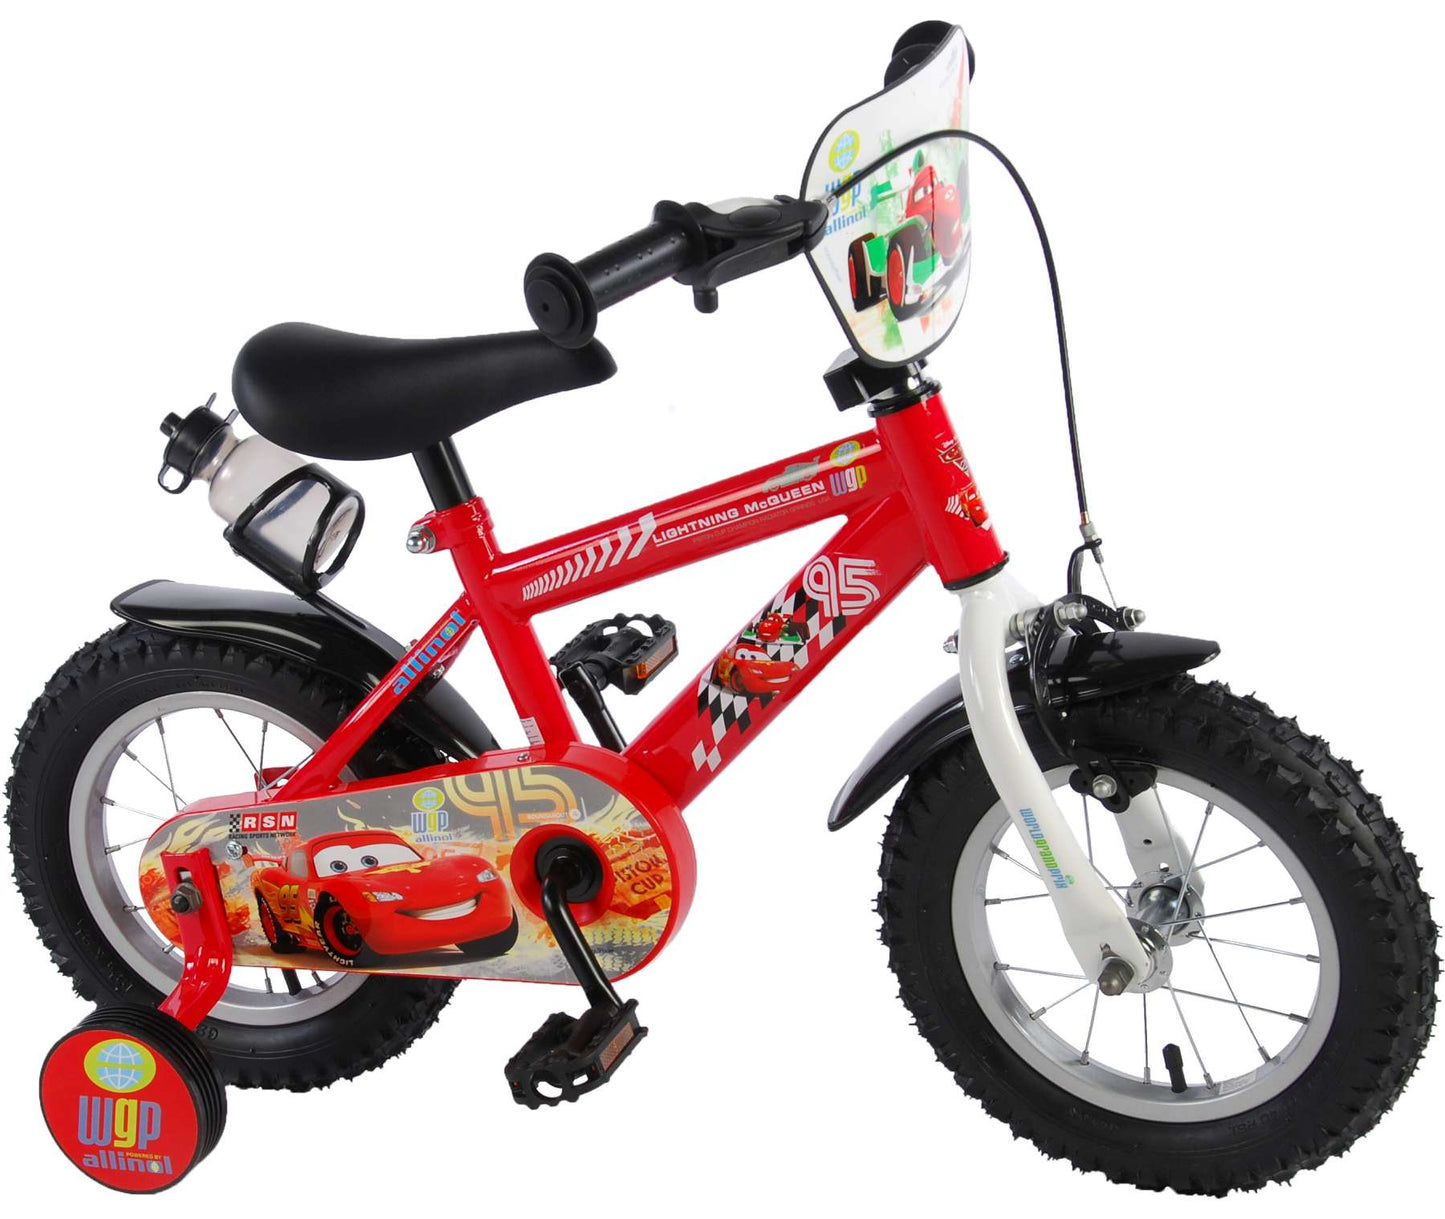 Bike per bambini Disney Cars - Boys - 12 pollici - rosso